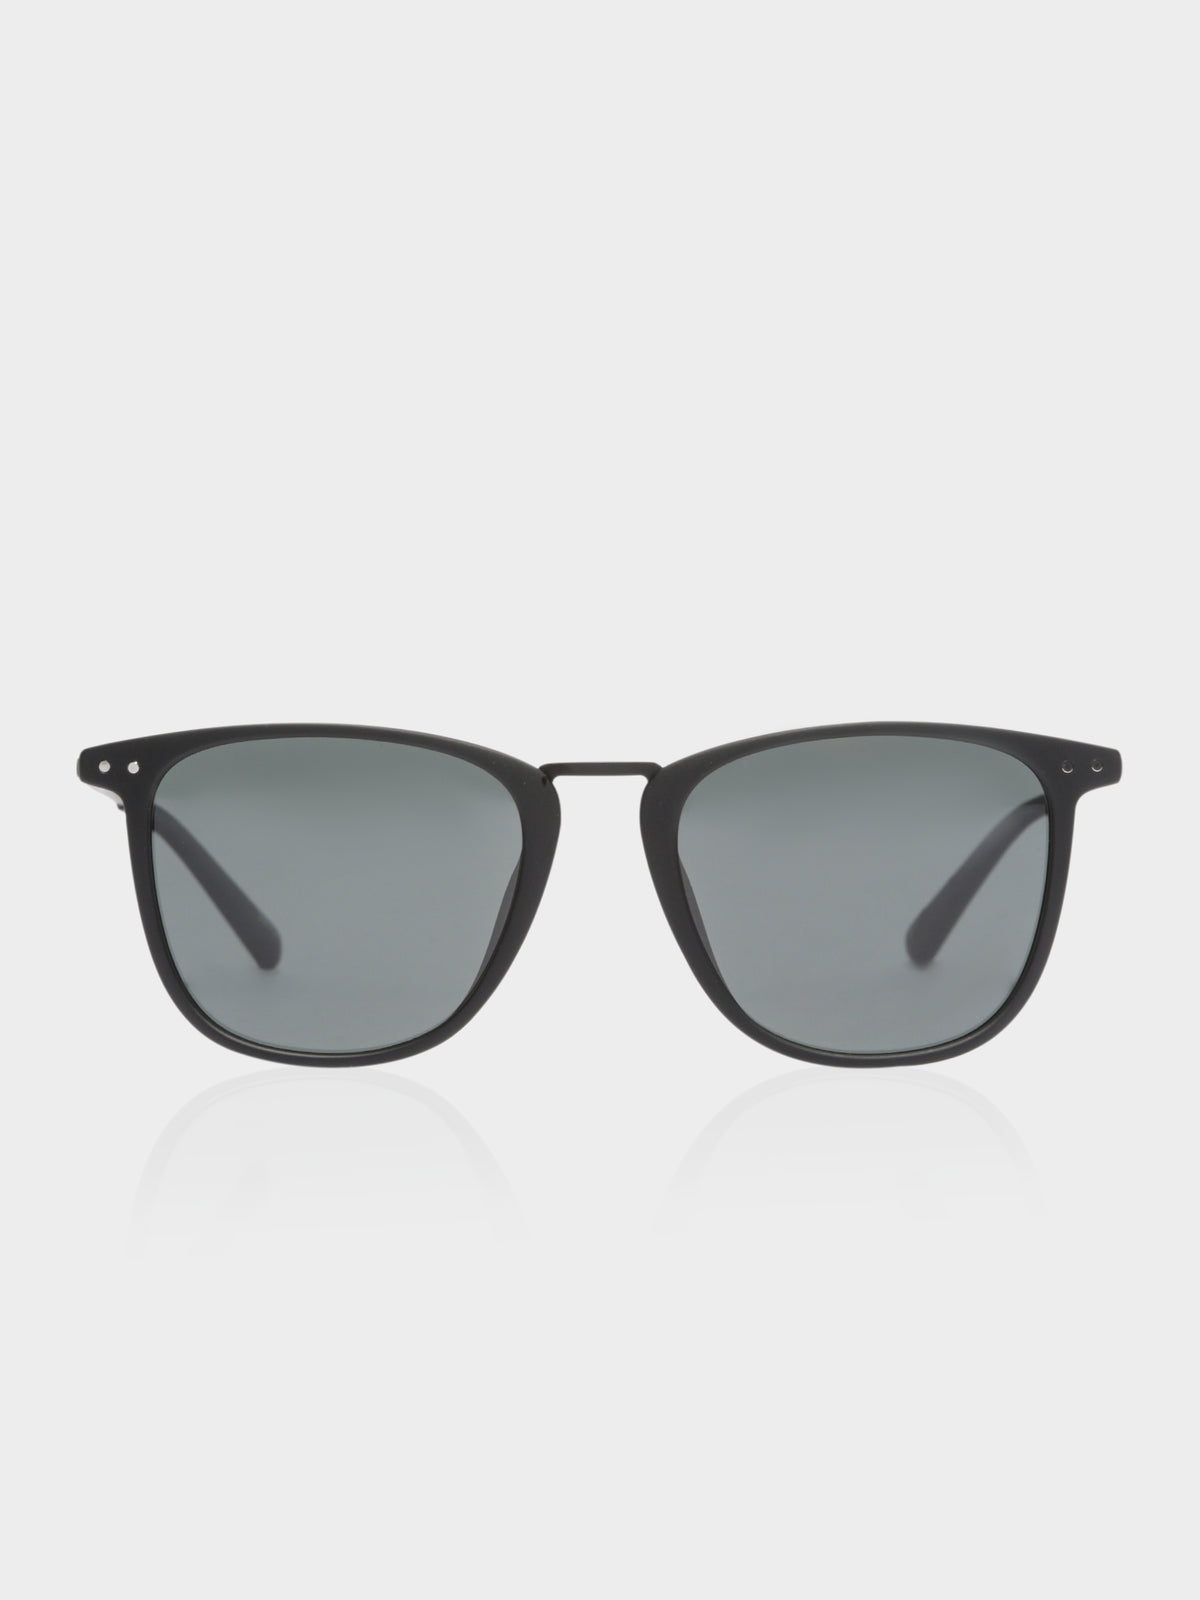 NYC Sunglasses in Matte Black &amp; Dark Grey